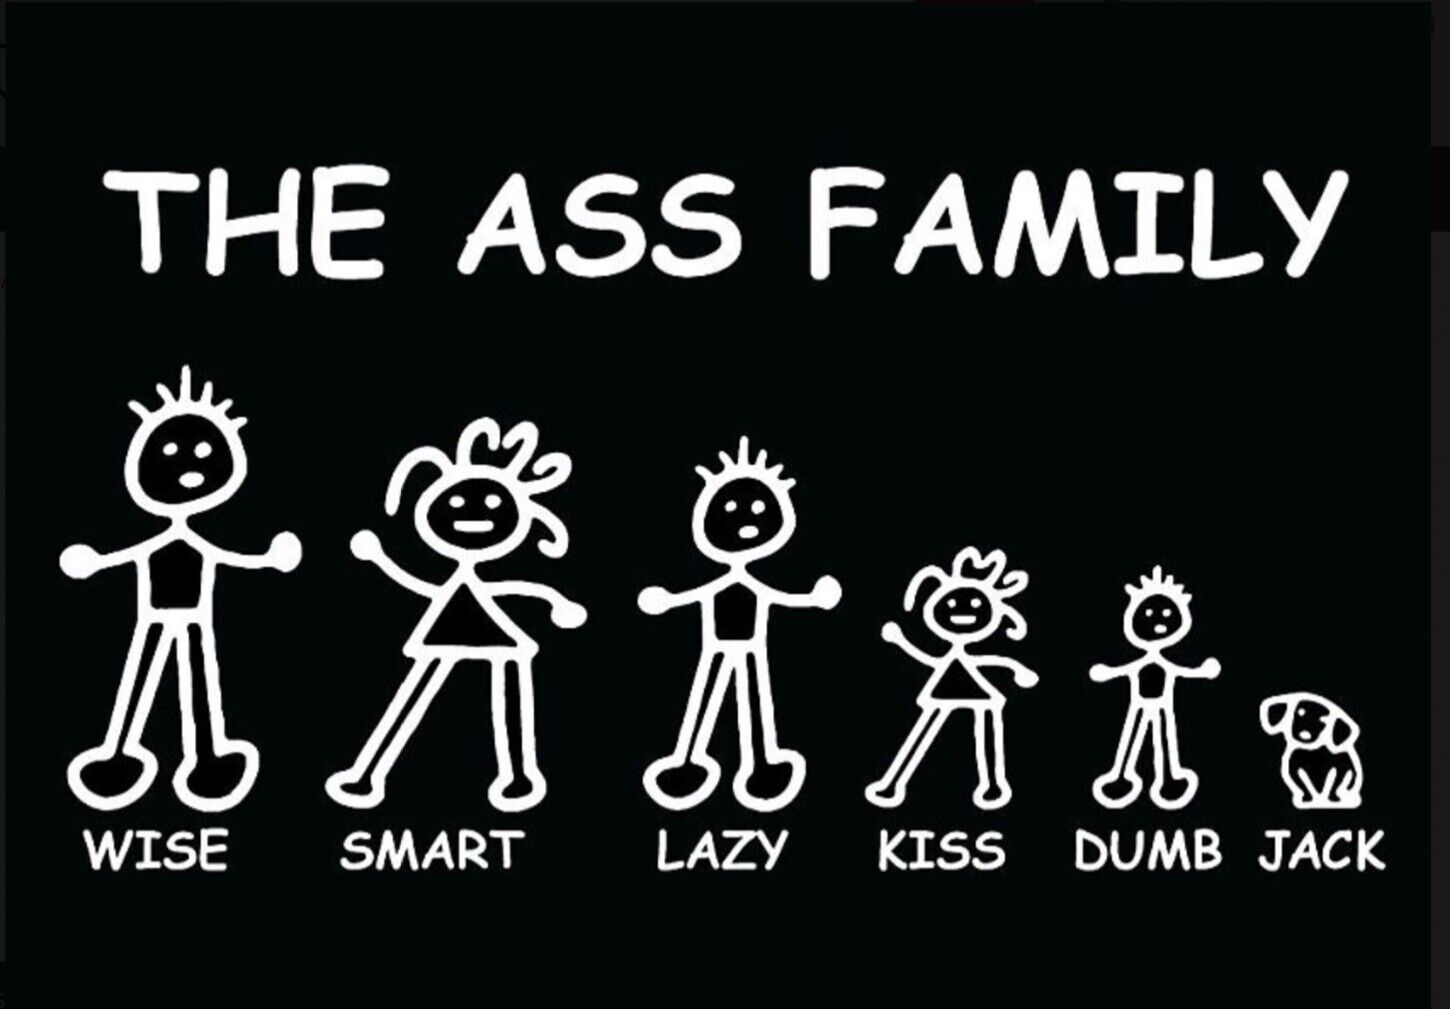 Meet The Ass Family,Wise,Smart,Lazy,Dumb,Kiss & Jack Ass on a 3.5”x 2.5” Magnet.